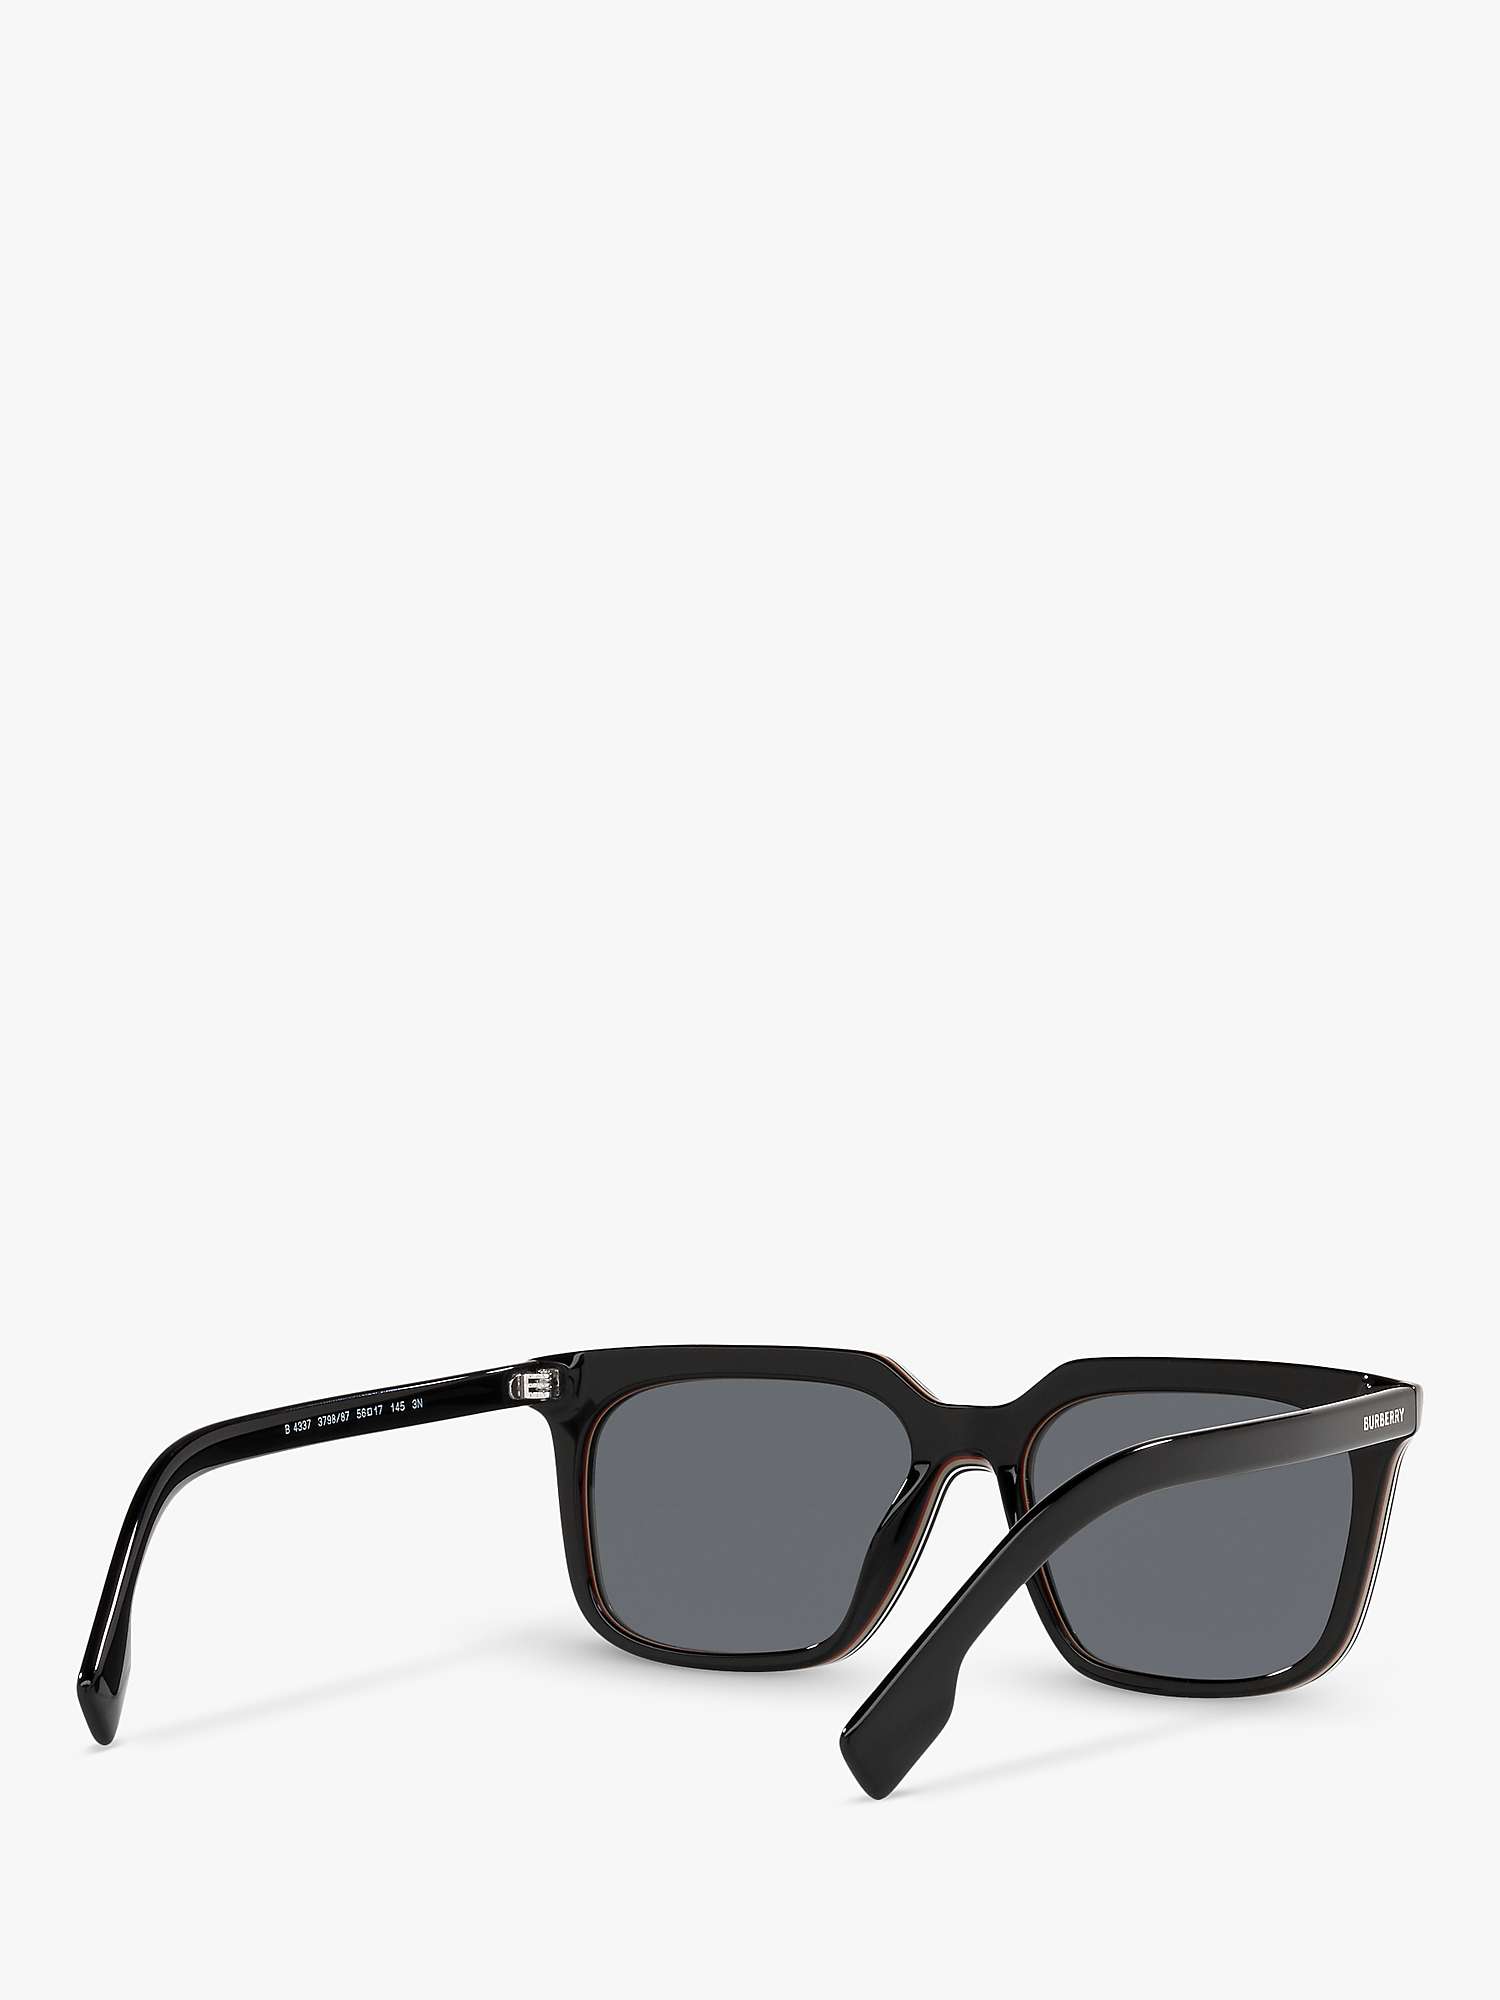 Buy Burberry BE4337 Men's Square Sunglasses Online at johnlewis.com